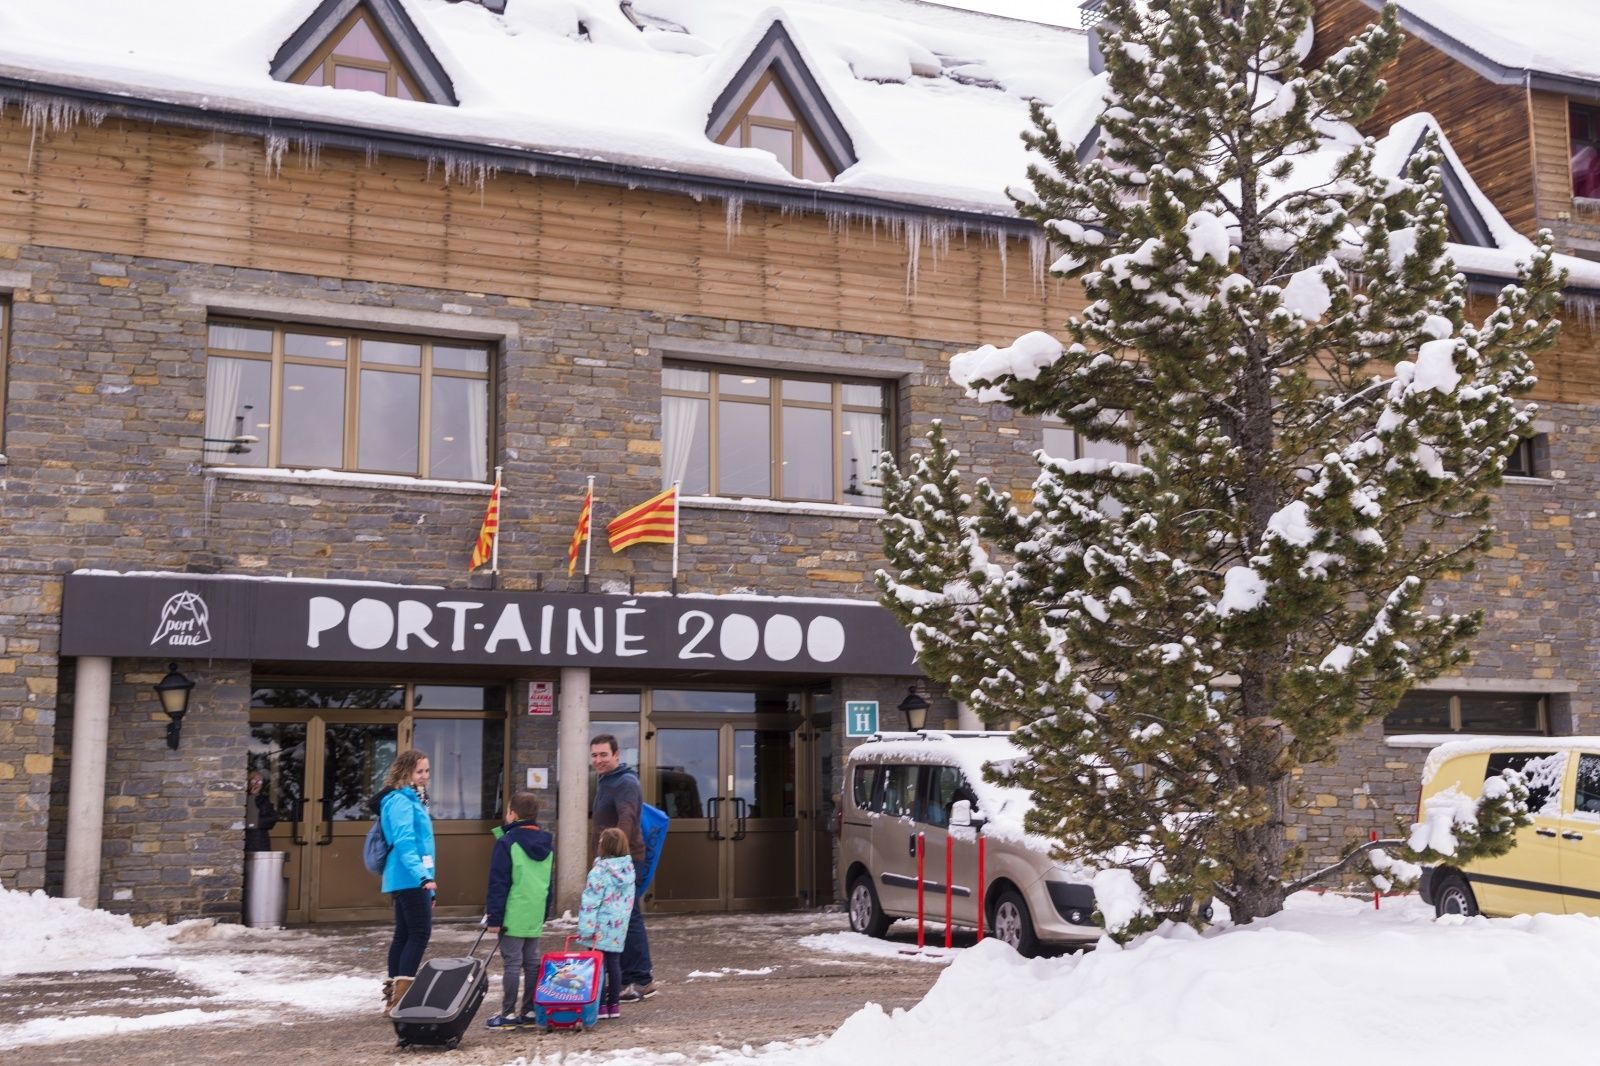 hoteles y restauració esquí pallars sobirà